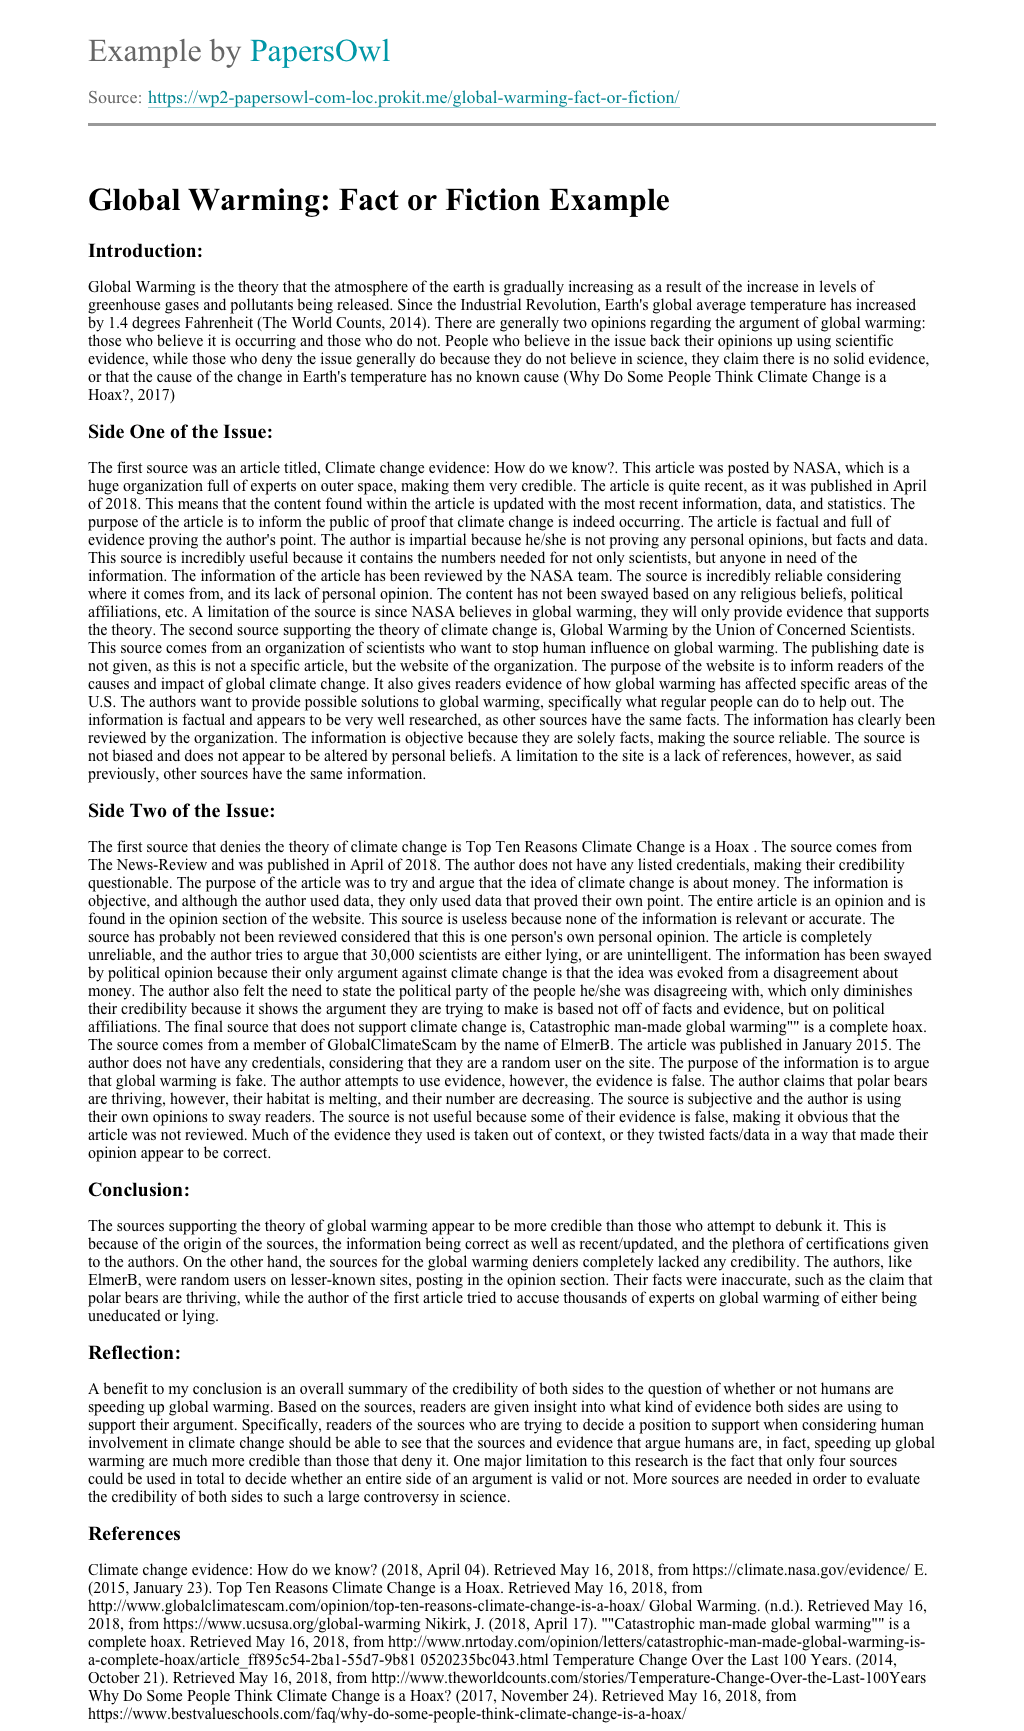 Example reflective writing essay